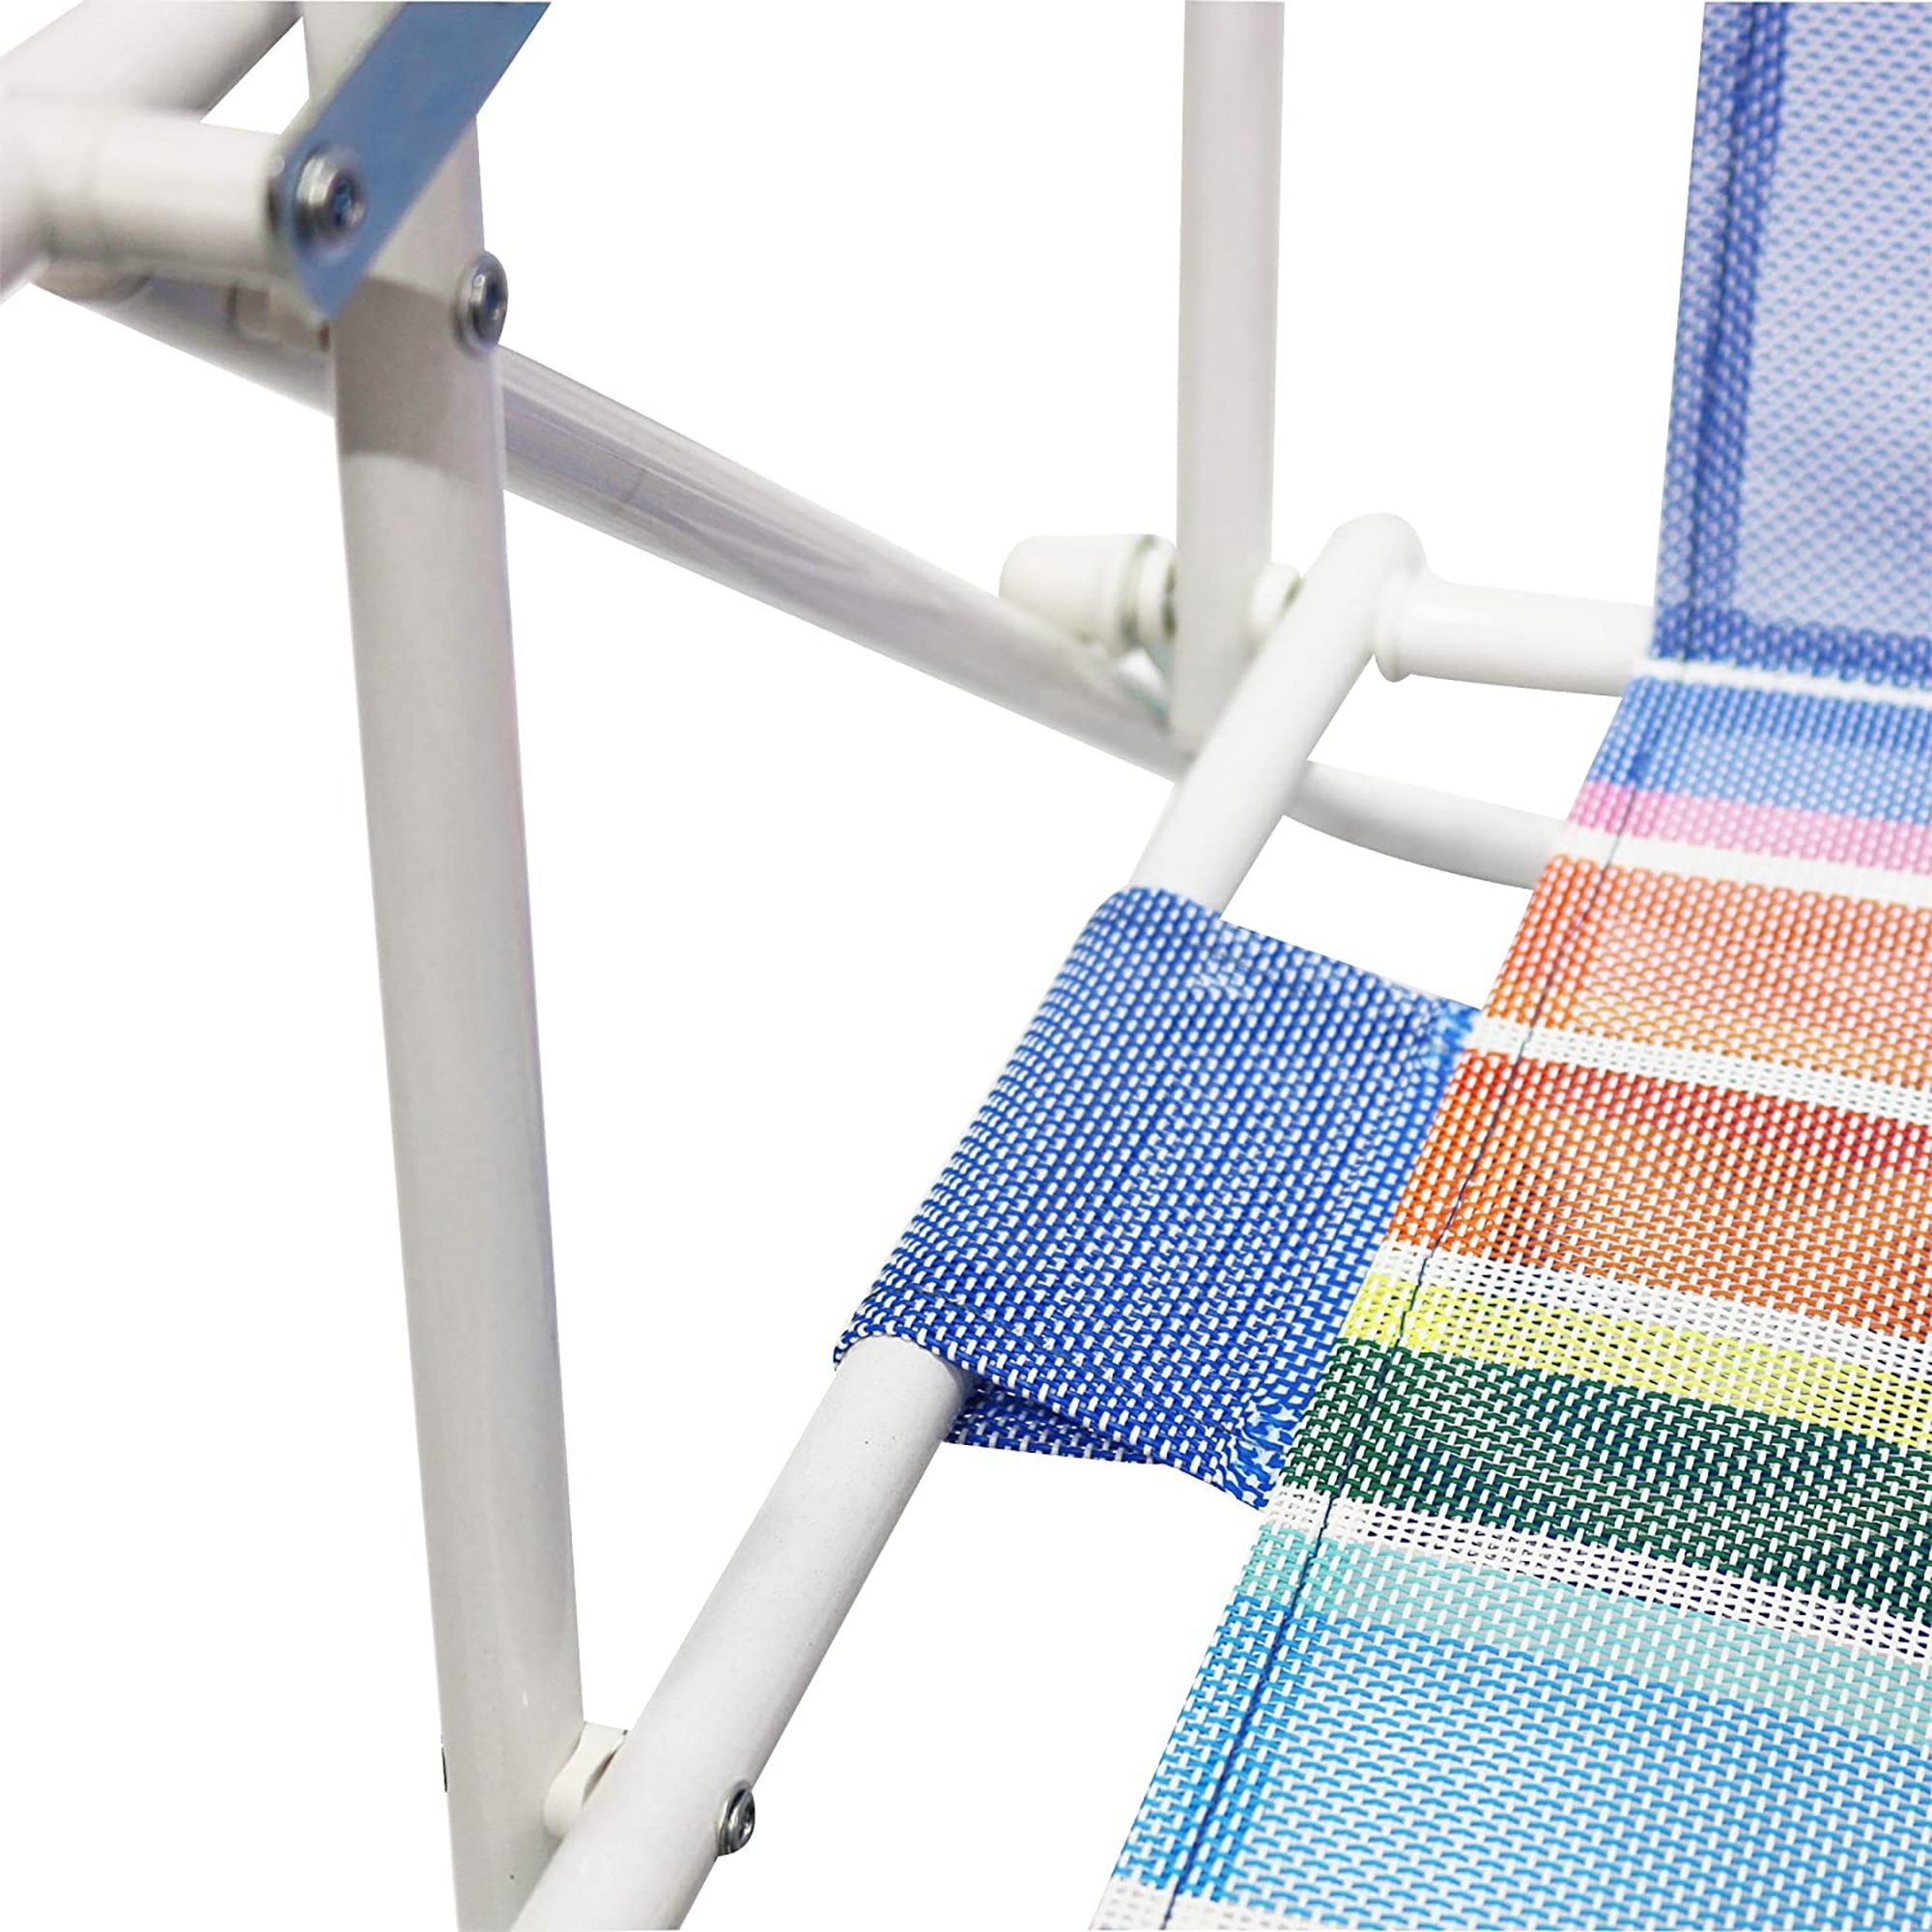 Textilene, Klappstuhl fach verstellbare Campingstuhl mit Regenbogen 2 HOMECALL Rückenlehne Strandstuhl